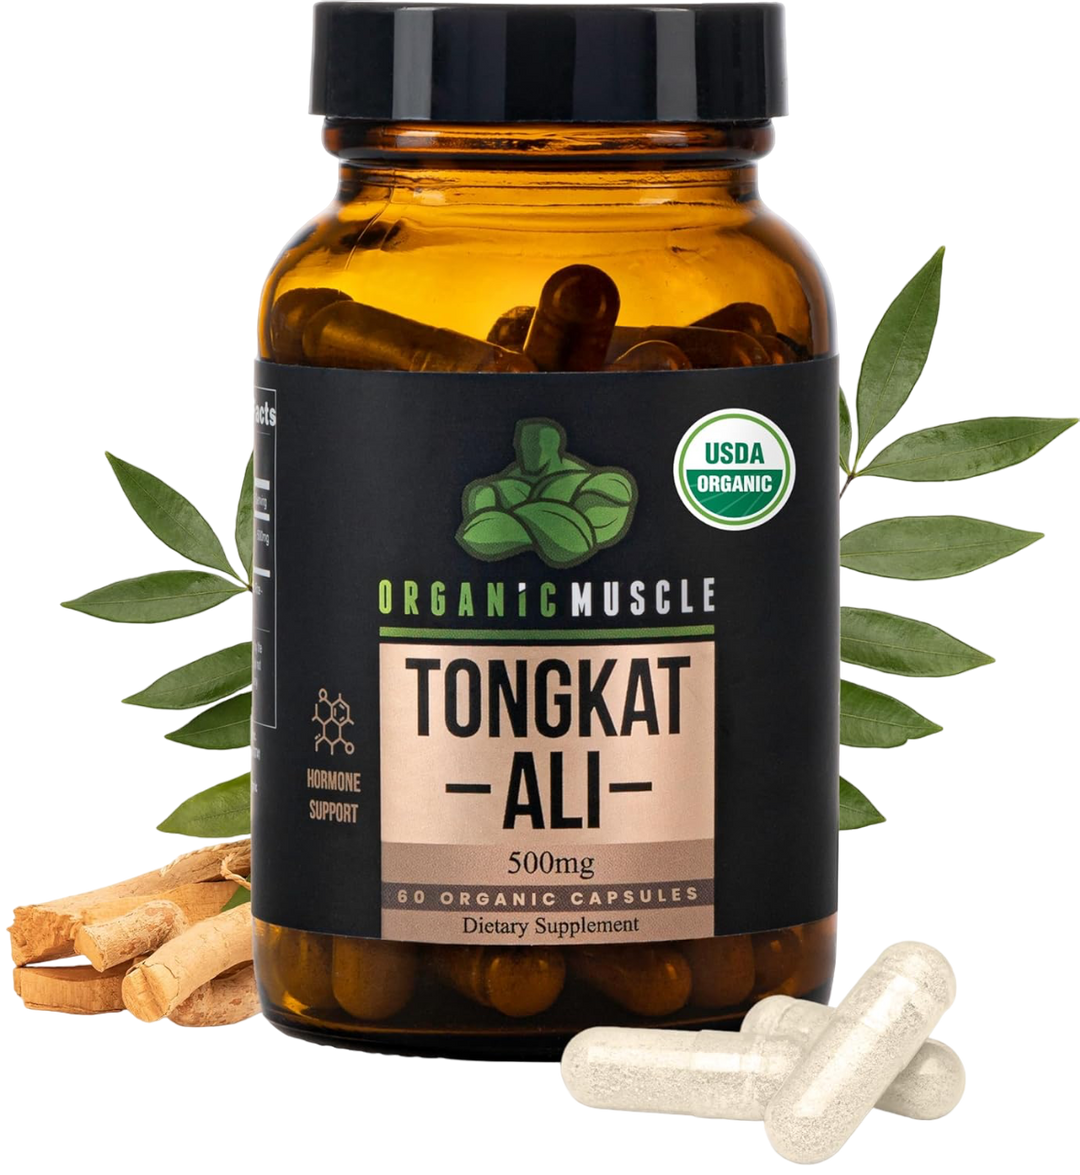 Organic Muscle Tongkat Ali Supplement - Boost Vitality and Balance Hormones